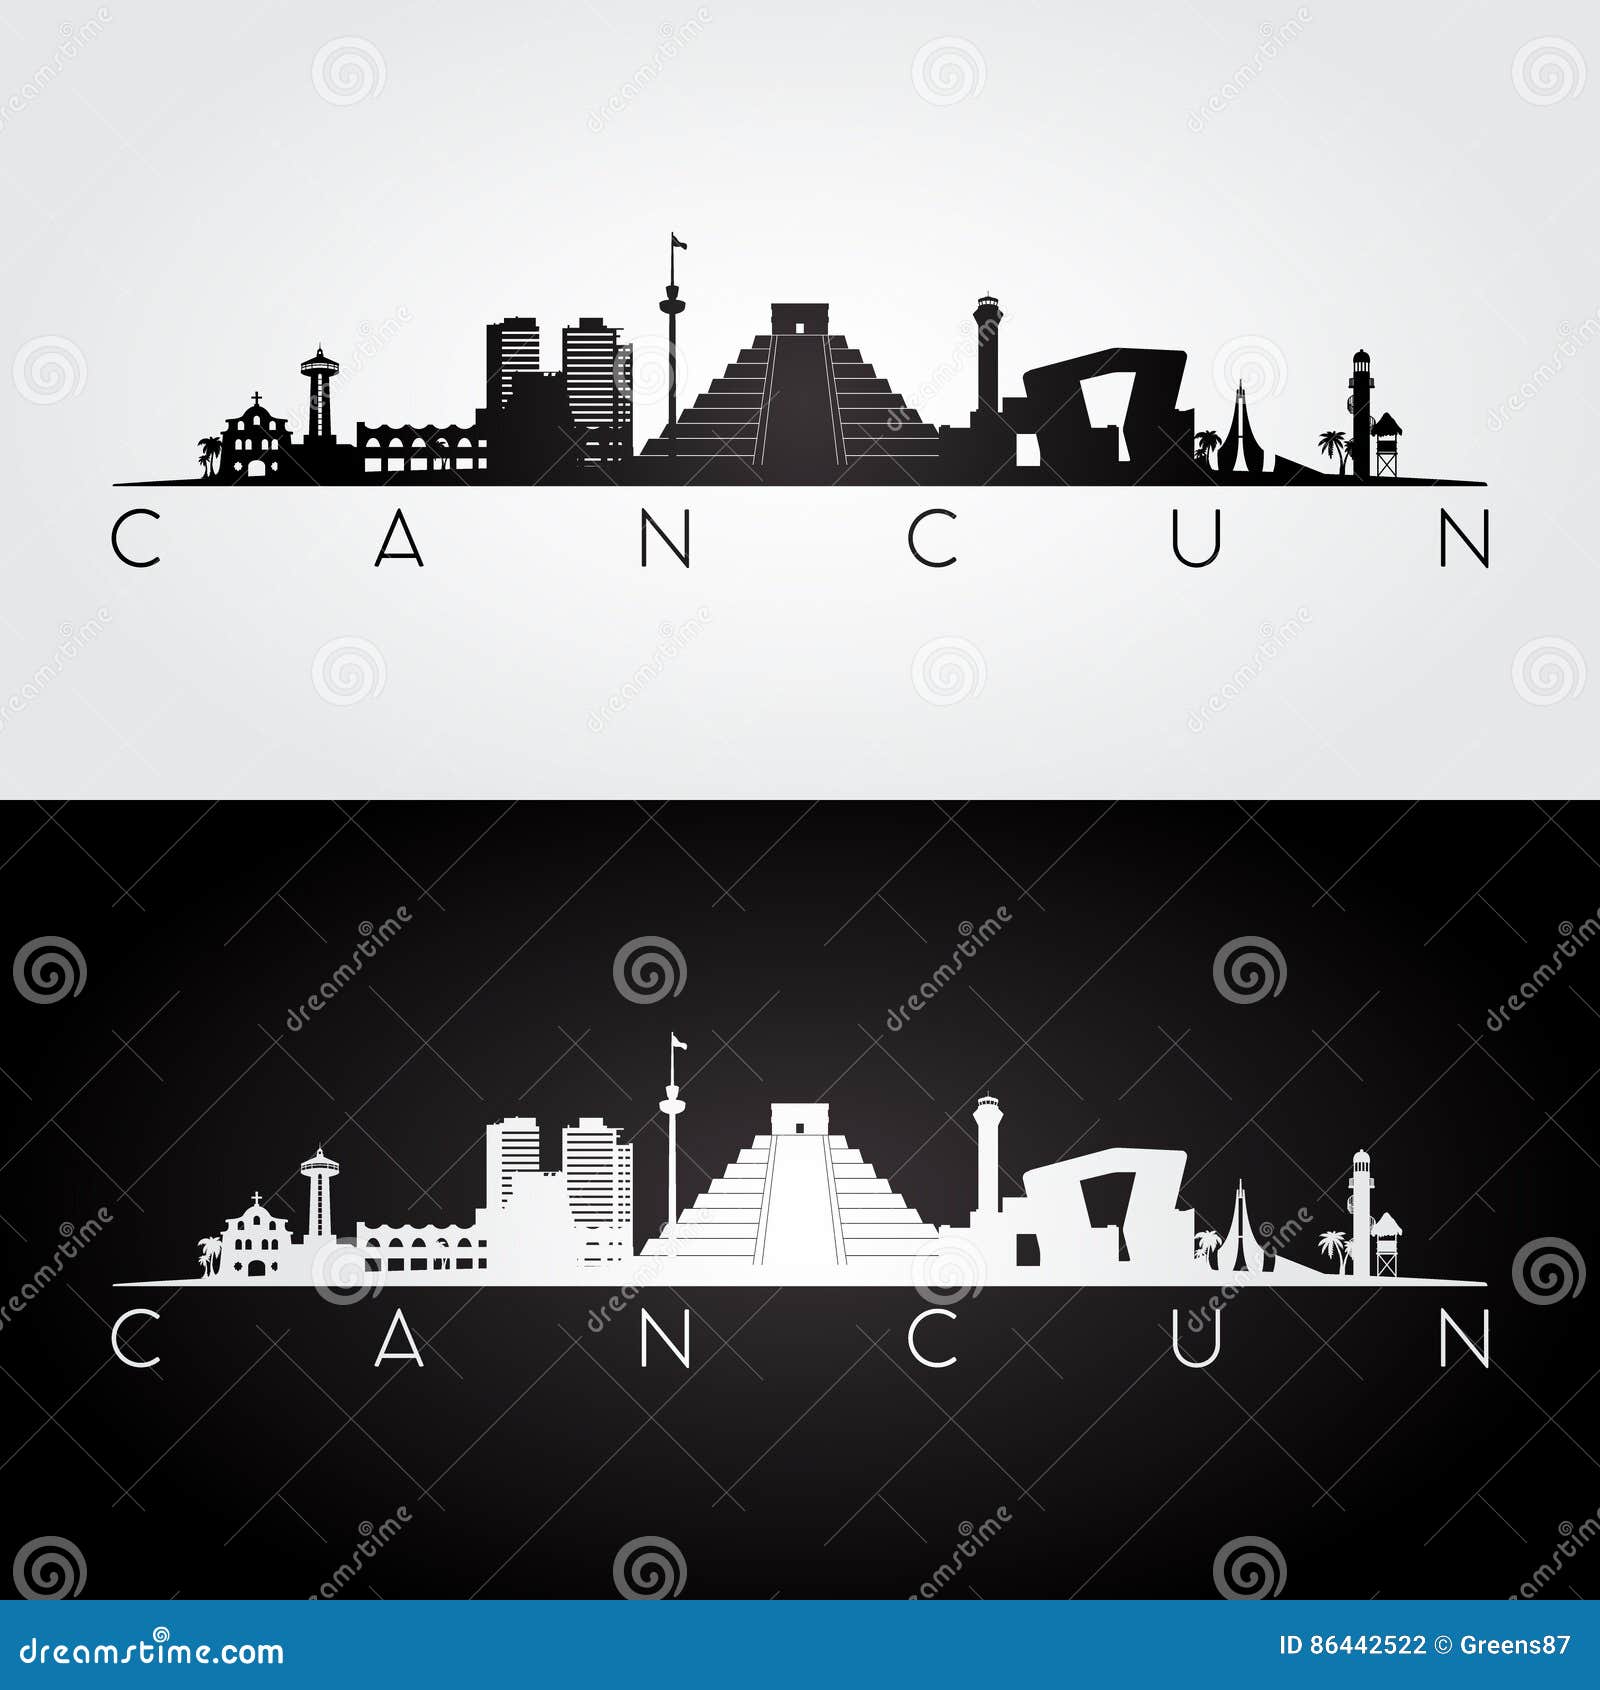 cancun skyline and landmarks silhouette.